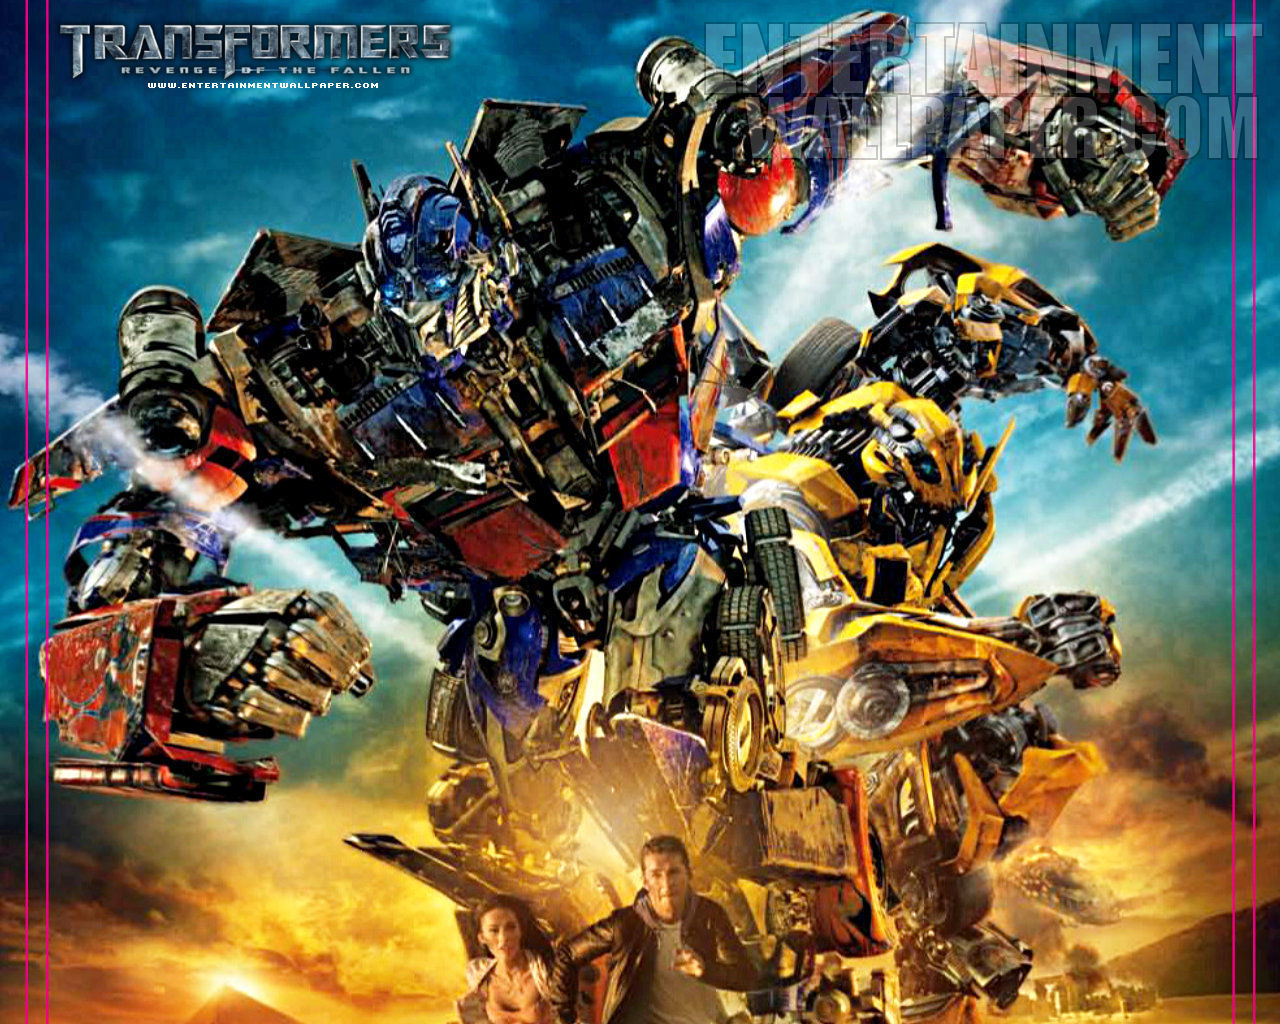 Amazing Wallpapers: Transformers wallpaper, transformer ...